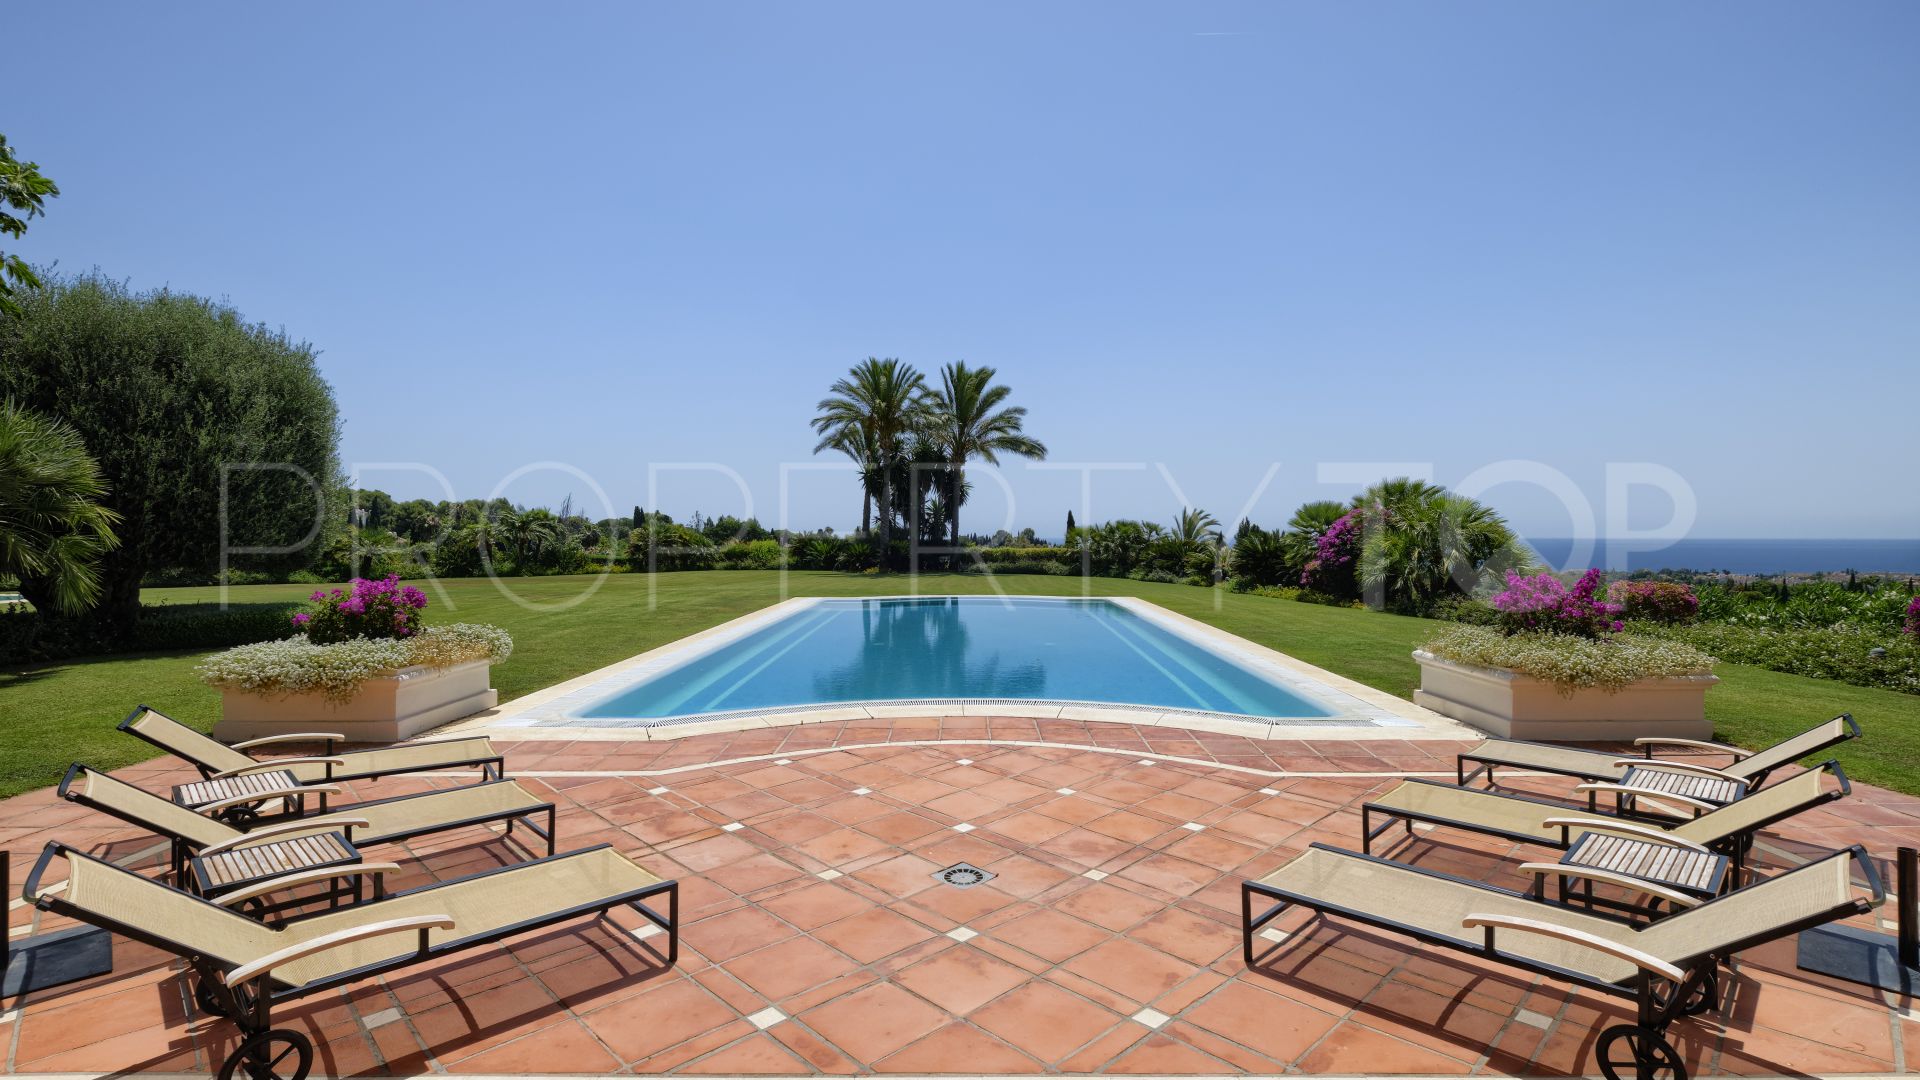 4 bedrooms villa in Marbella Hill Club for sale